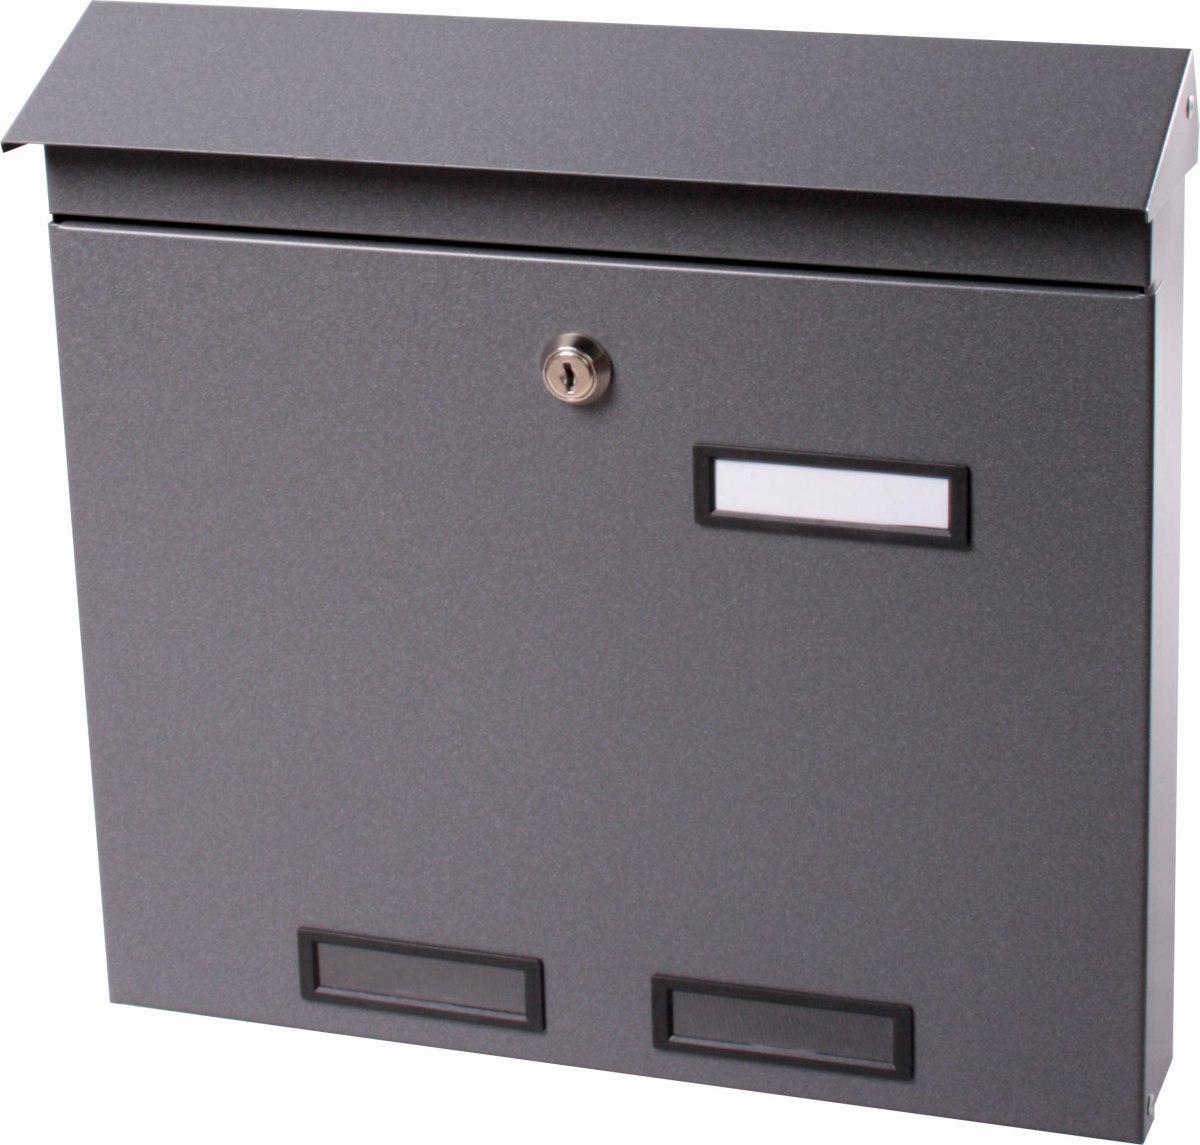 Mailbox - TRANSVERSE EURO BOX SEPG